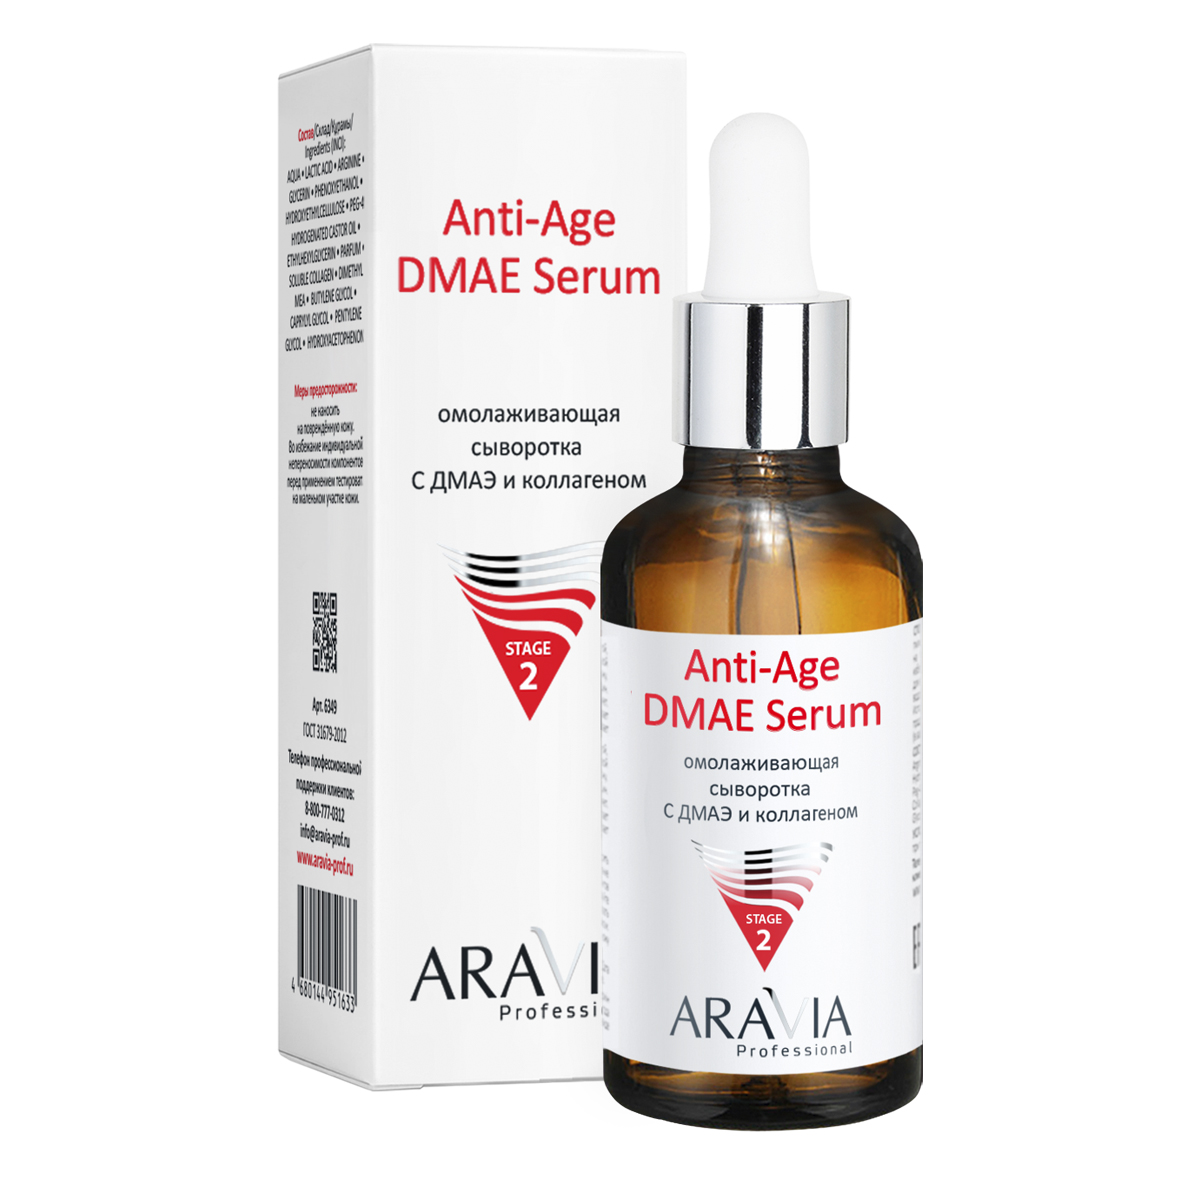 Aravia Professional Омолаживающая сыворотка с ДМАЭ и коллагеном Anti-Age DMAE Serum, 50 мл (Aravia Professional, Уход за лицом)